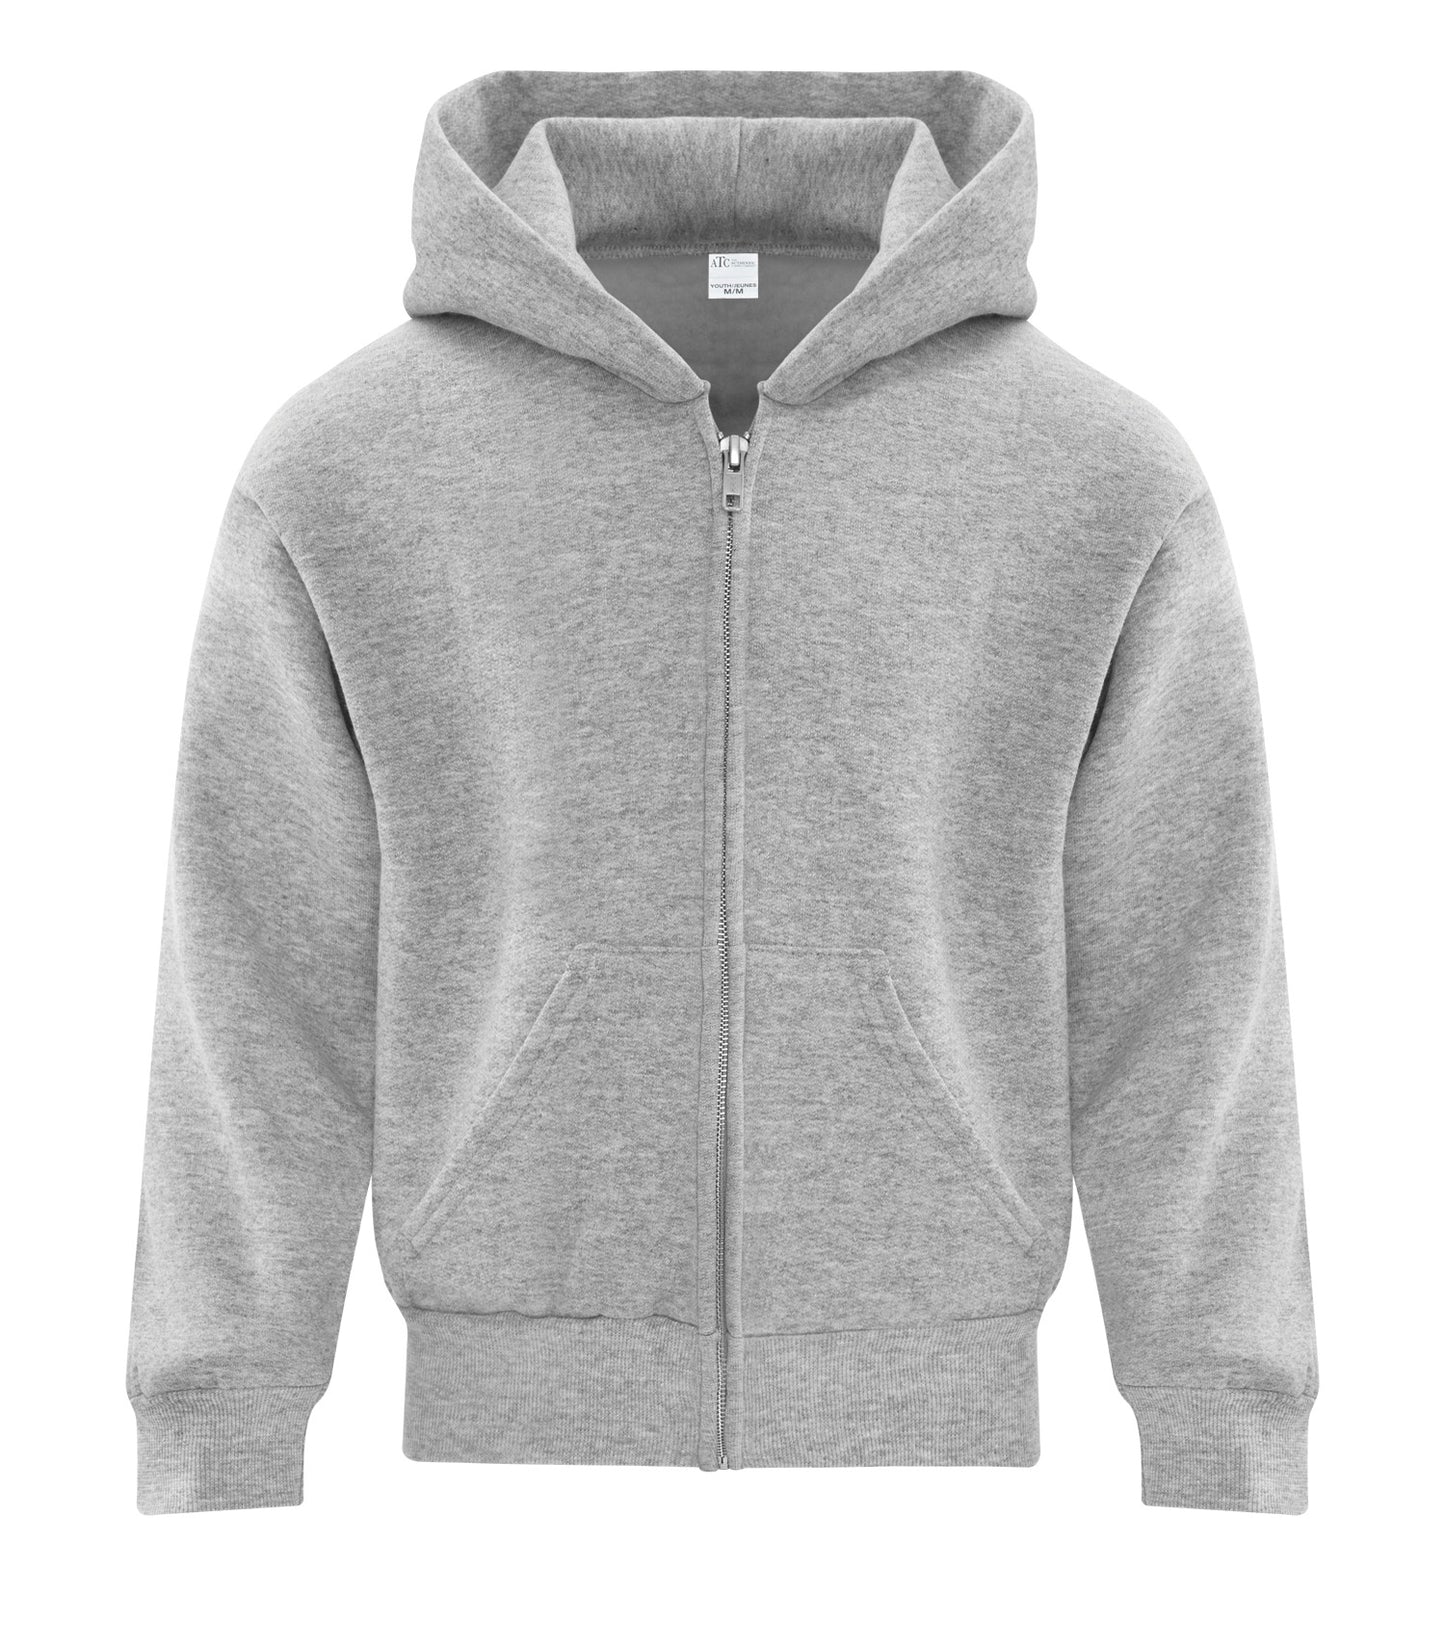 Youth, Full Zip Hooded Sweatshirt. ATCY2600